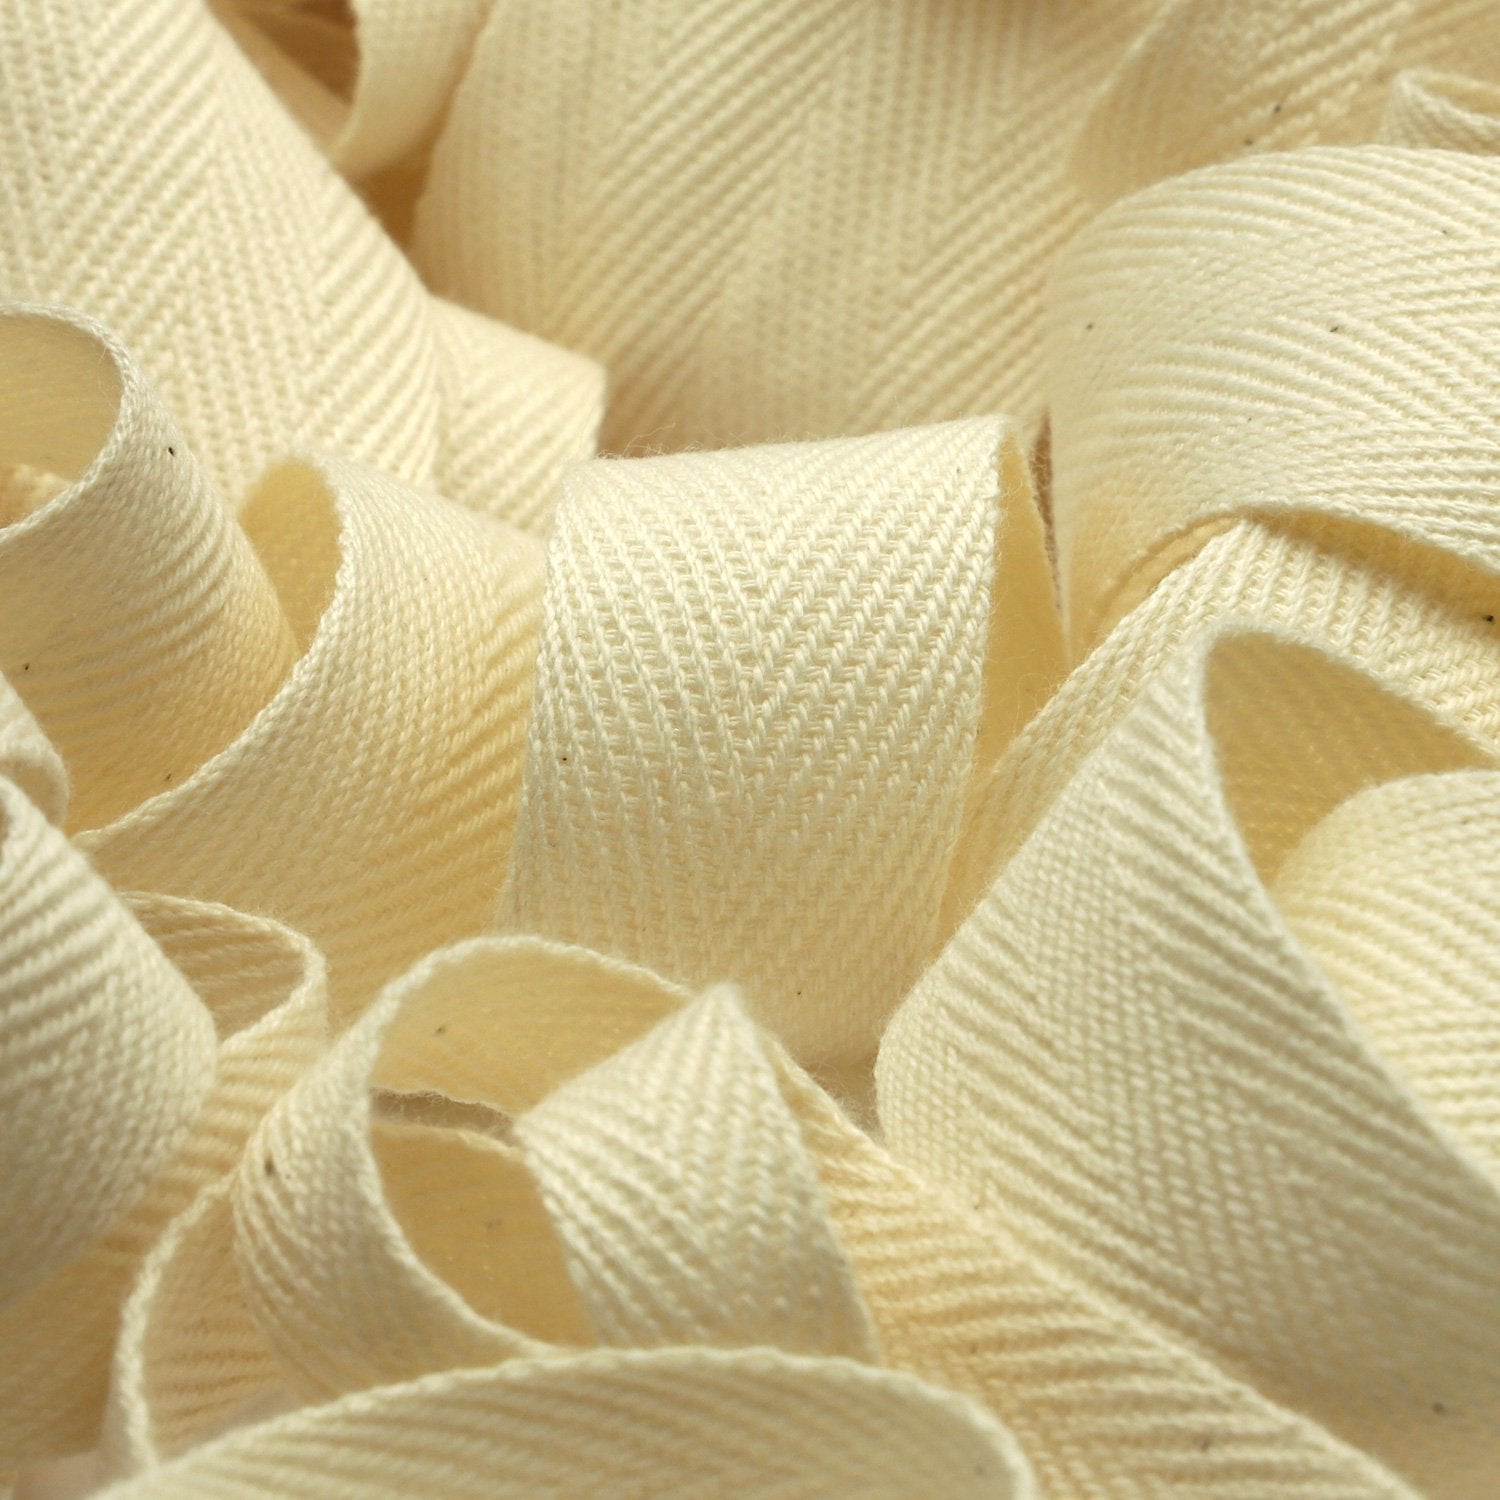 FUJIYAMA RIBBON [Wholesale] Organic Cotton Herringbone Ribbon 38mm Ecru 30 Meters Roll